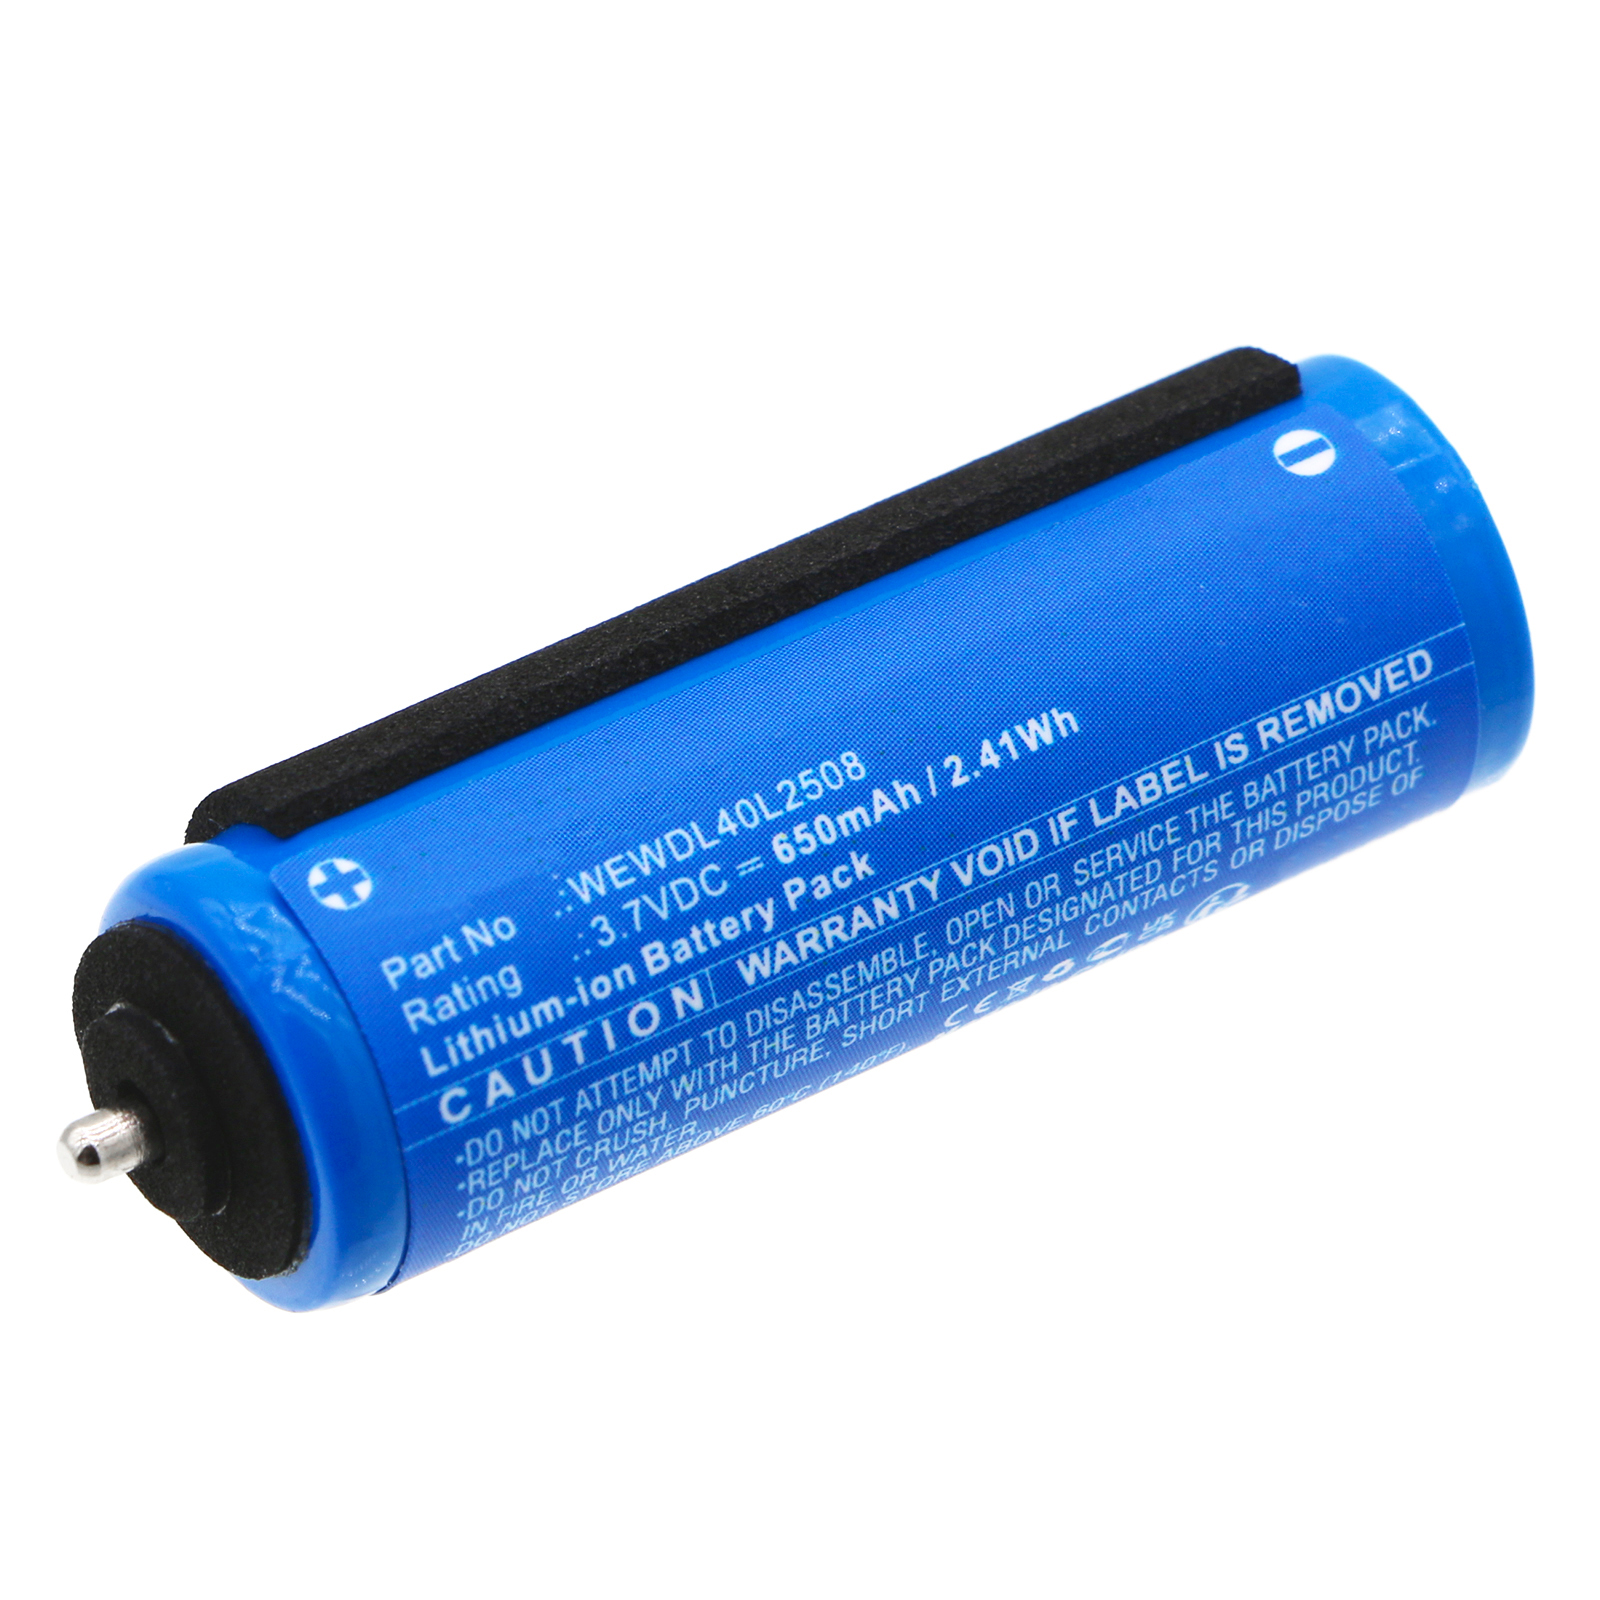 Batteries for PanasonicShaver